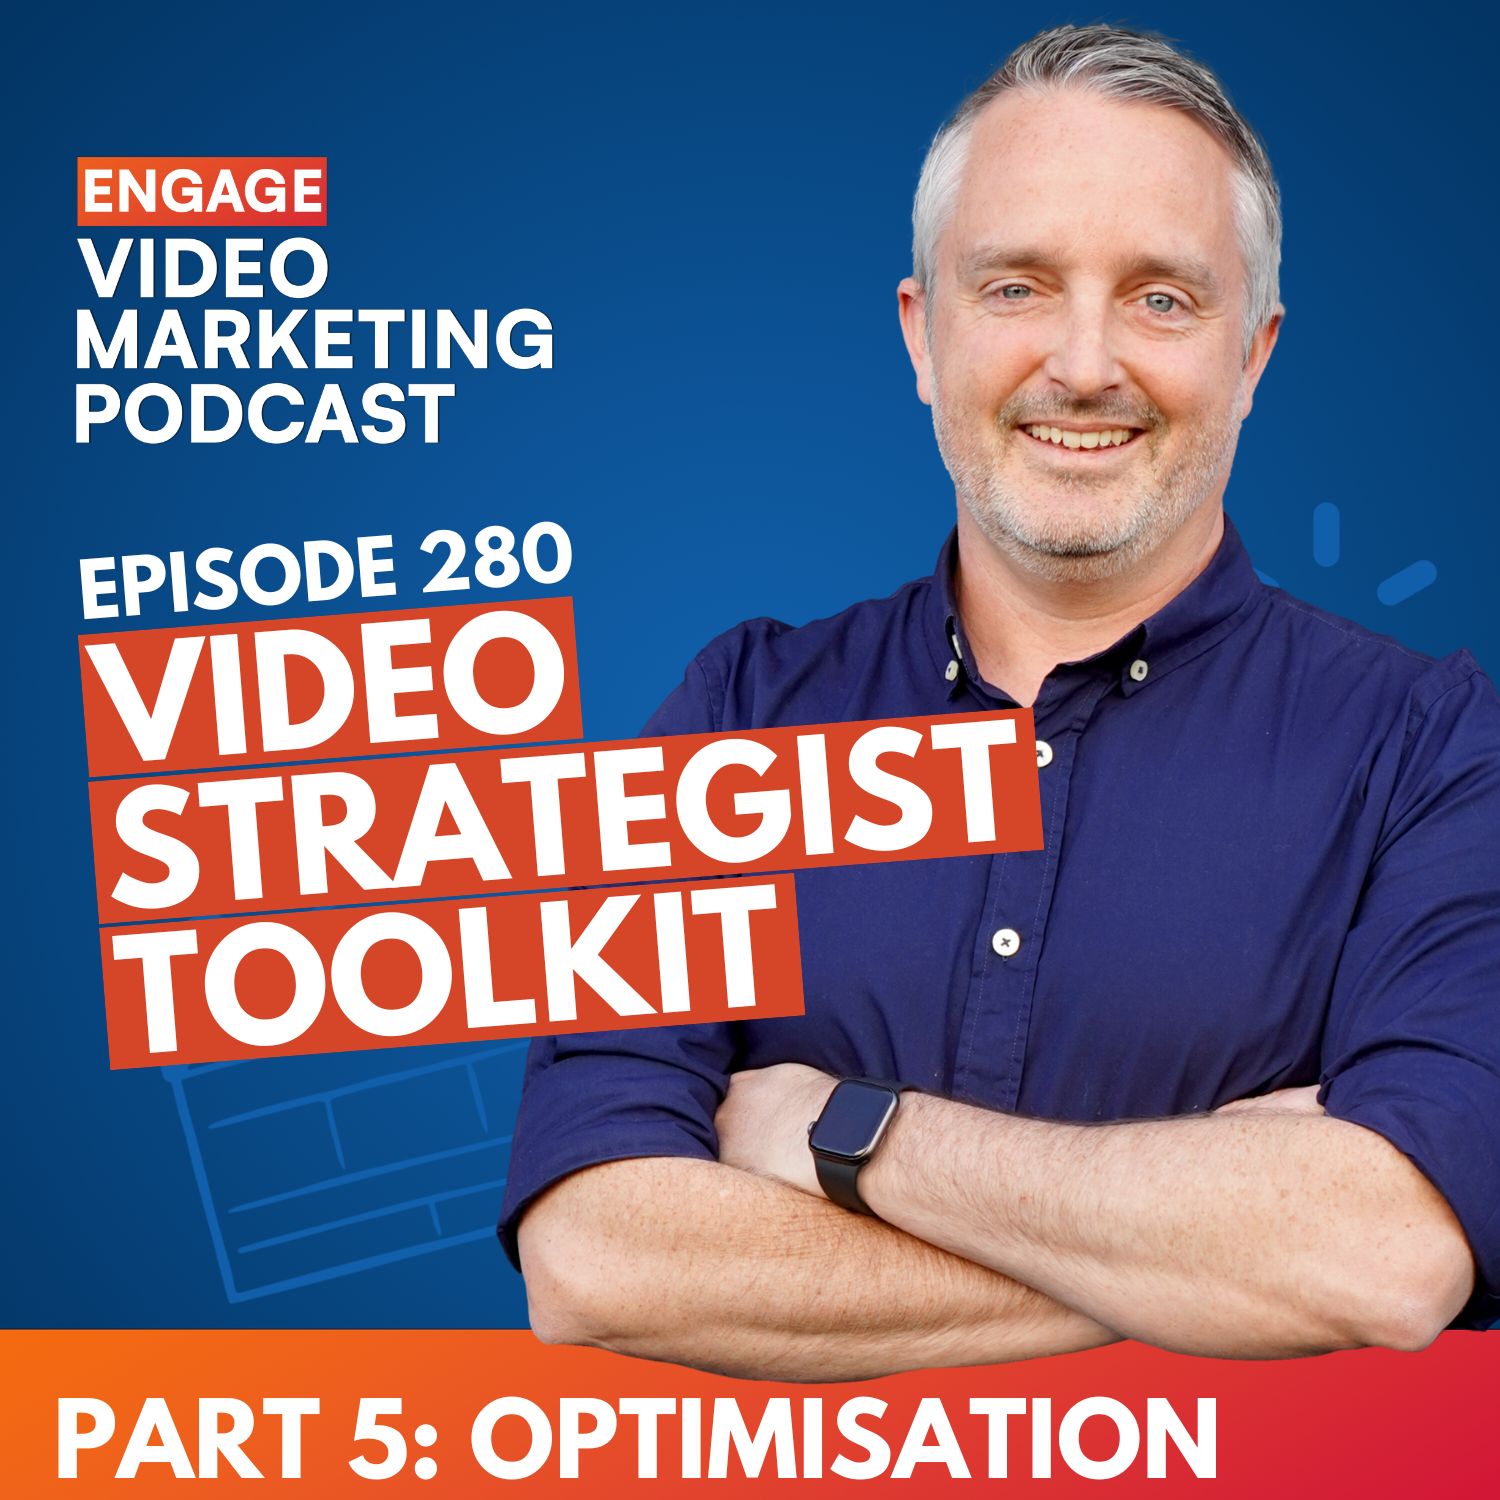 Video Strategist Toolkit Part 5: Optimisation